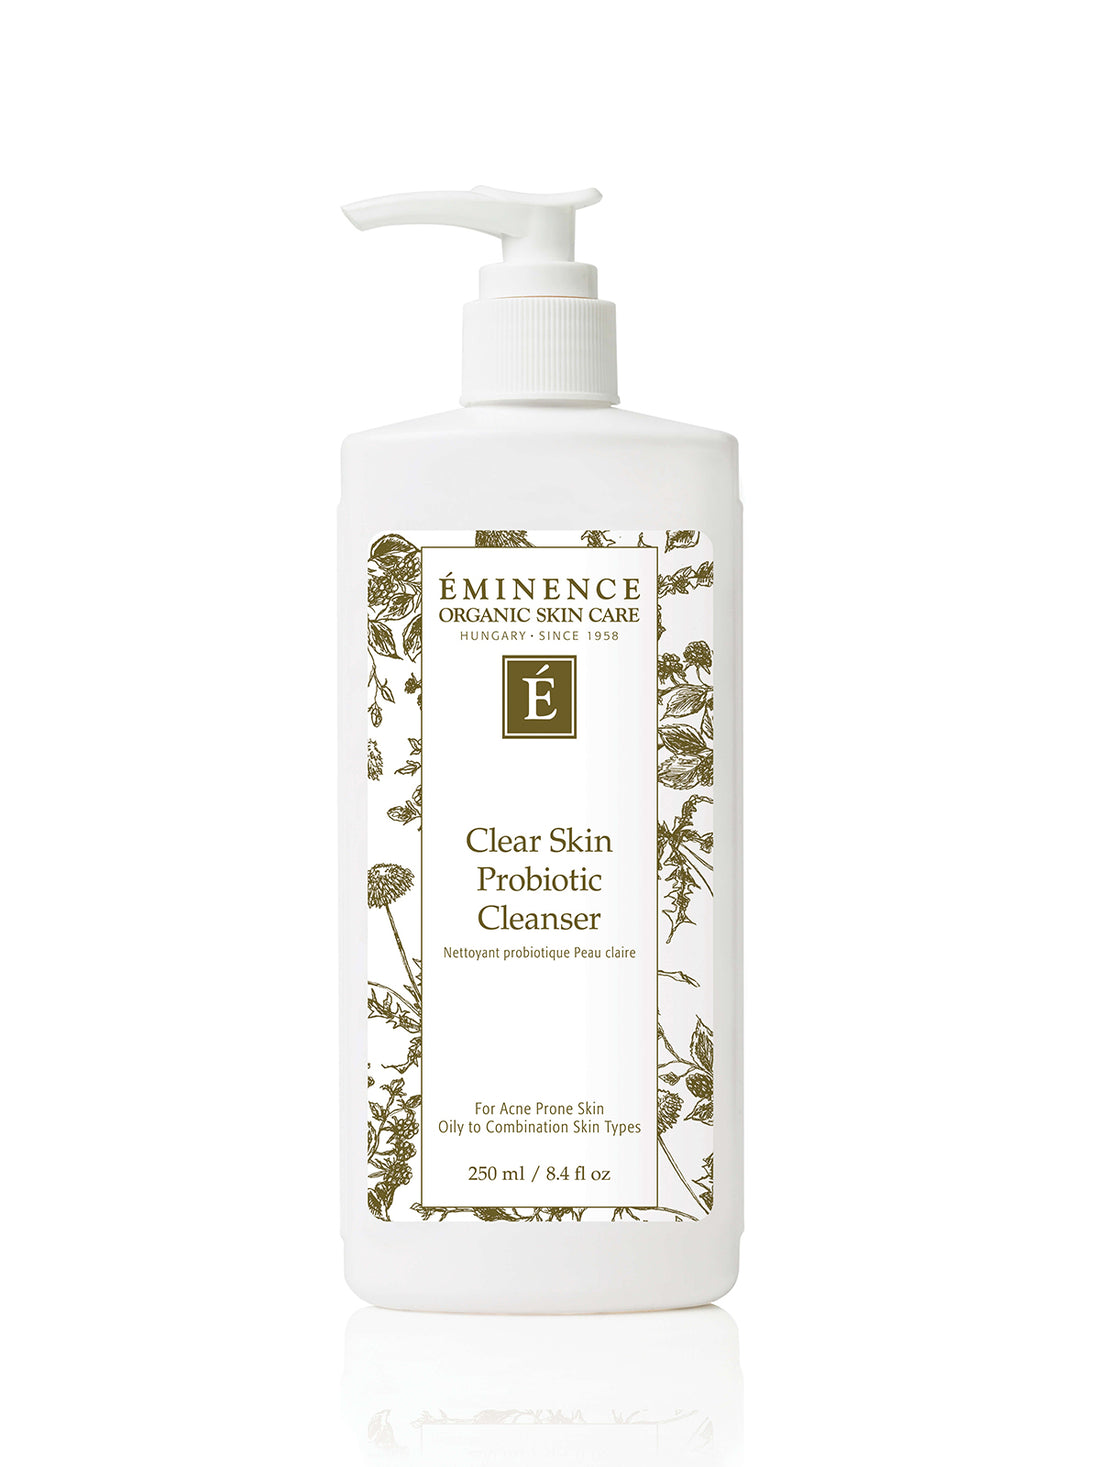 Eminence Organics Cleaar Skin Probiotic Cleanser bottle